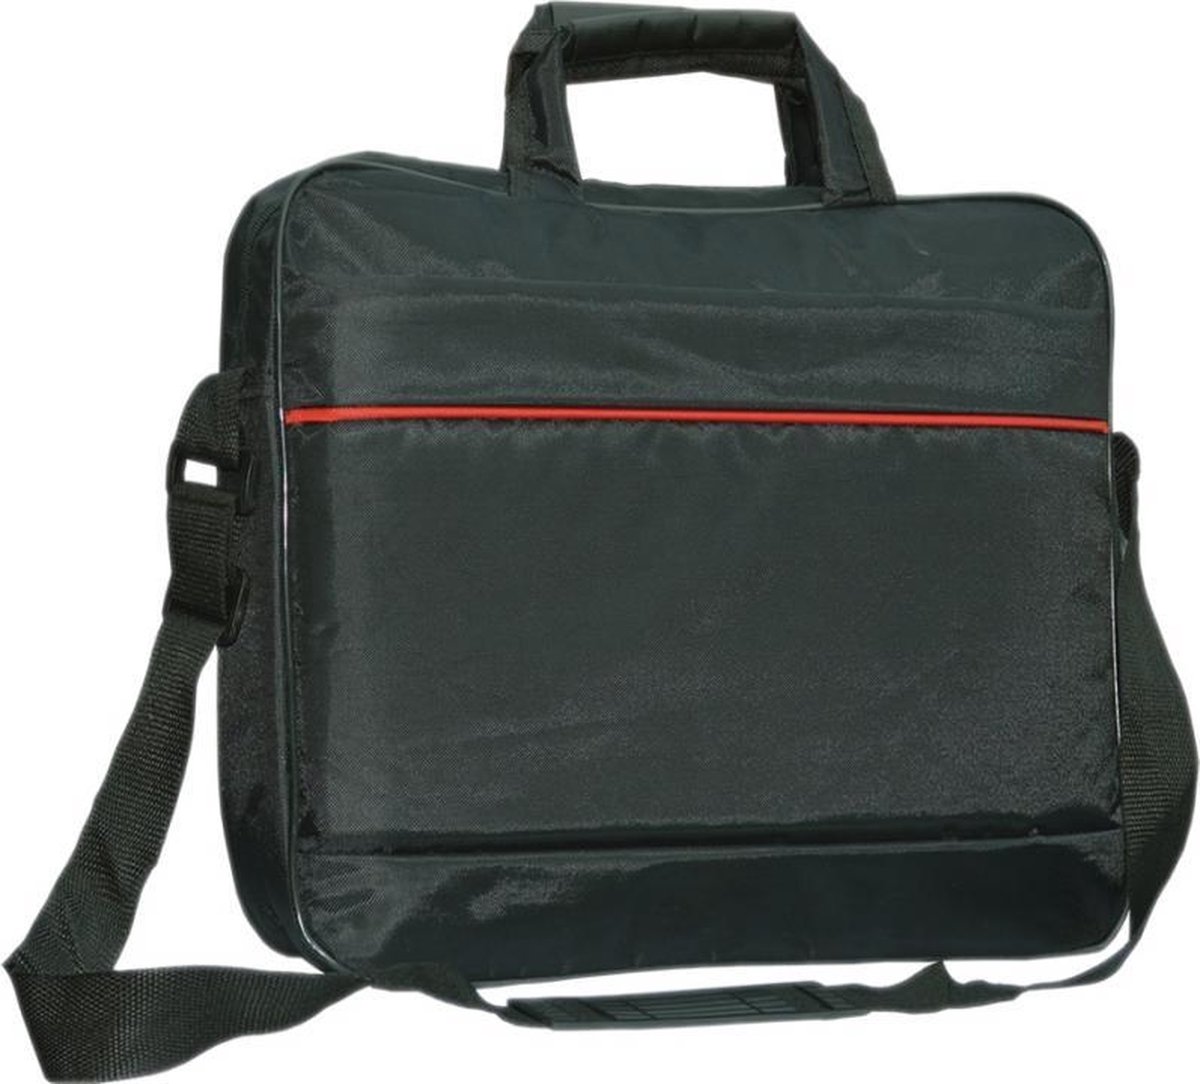 Samsung Ativ Book 5 14 Inch laptoptas messenger bag / schoudertas / tas , zwart , merk i12Cover